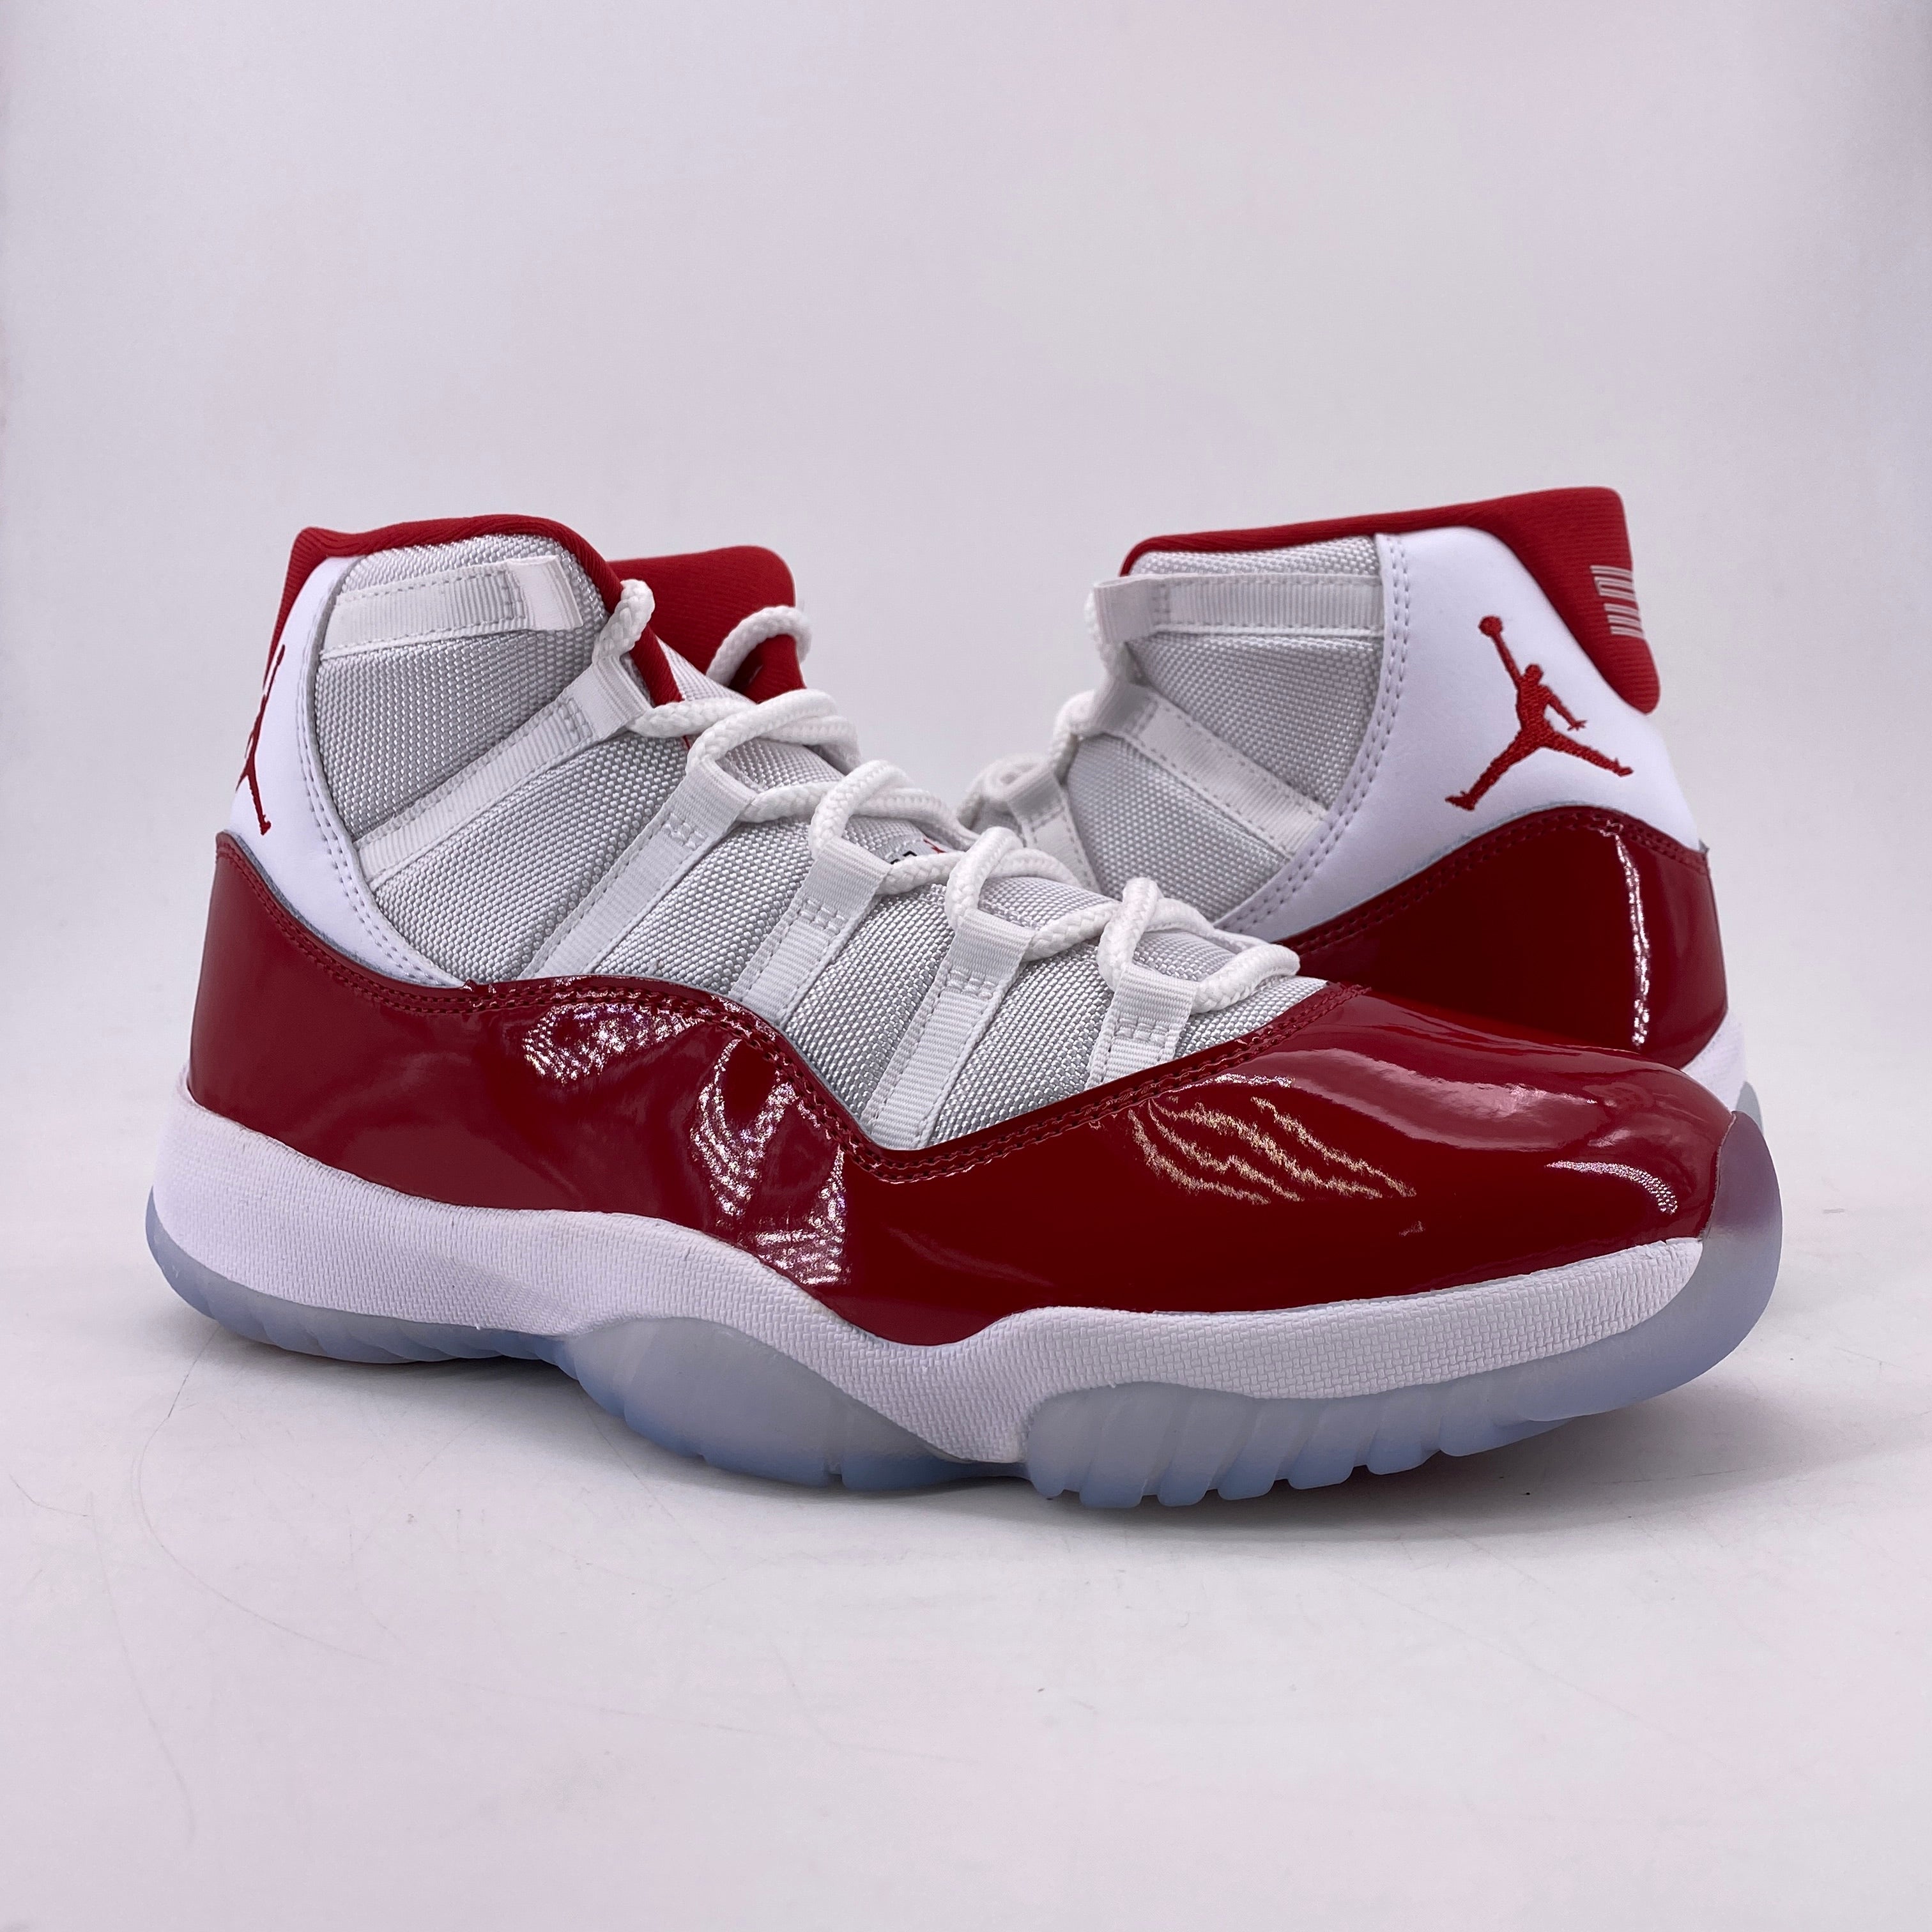 Air Jordan 11 Retro "Cherry" 2022 New Size 10.5